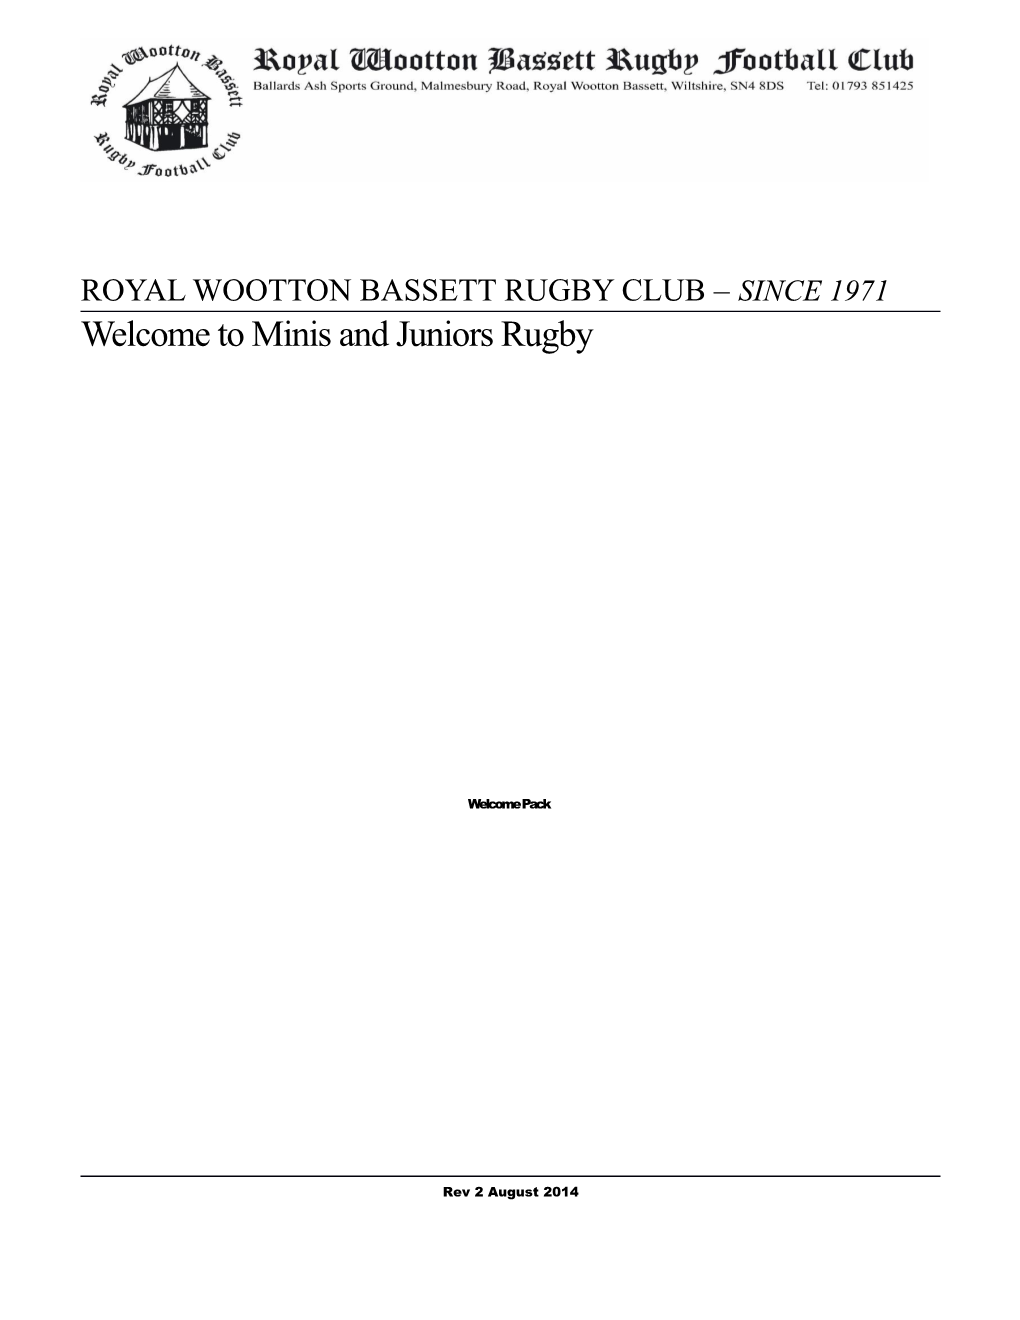 Royal Wootton Bassett Rugby Club Since 1971